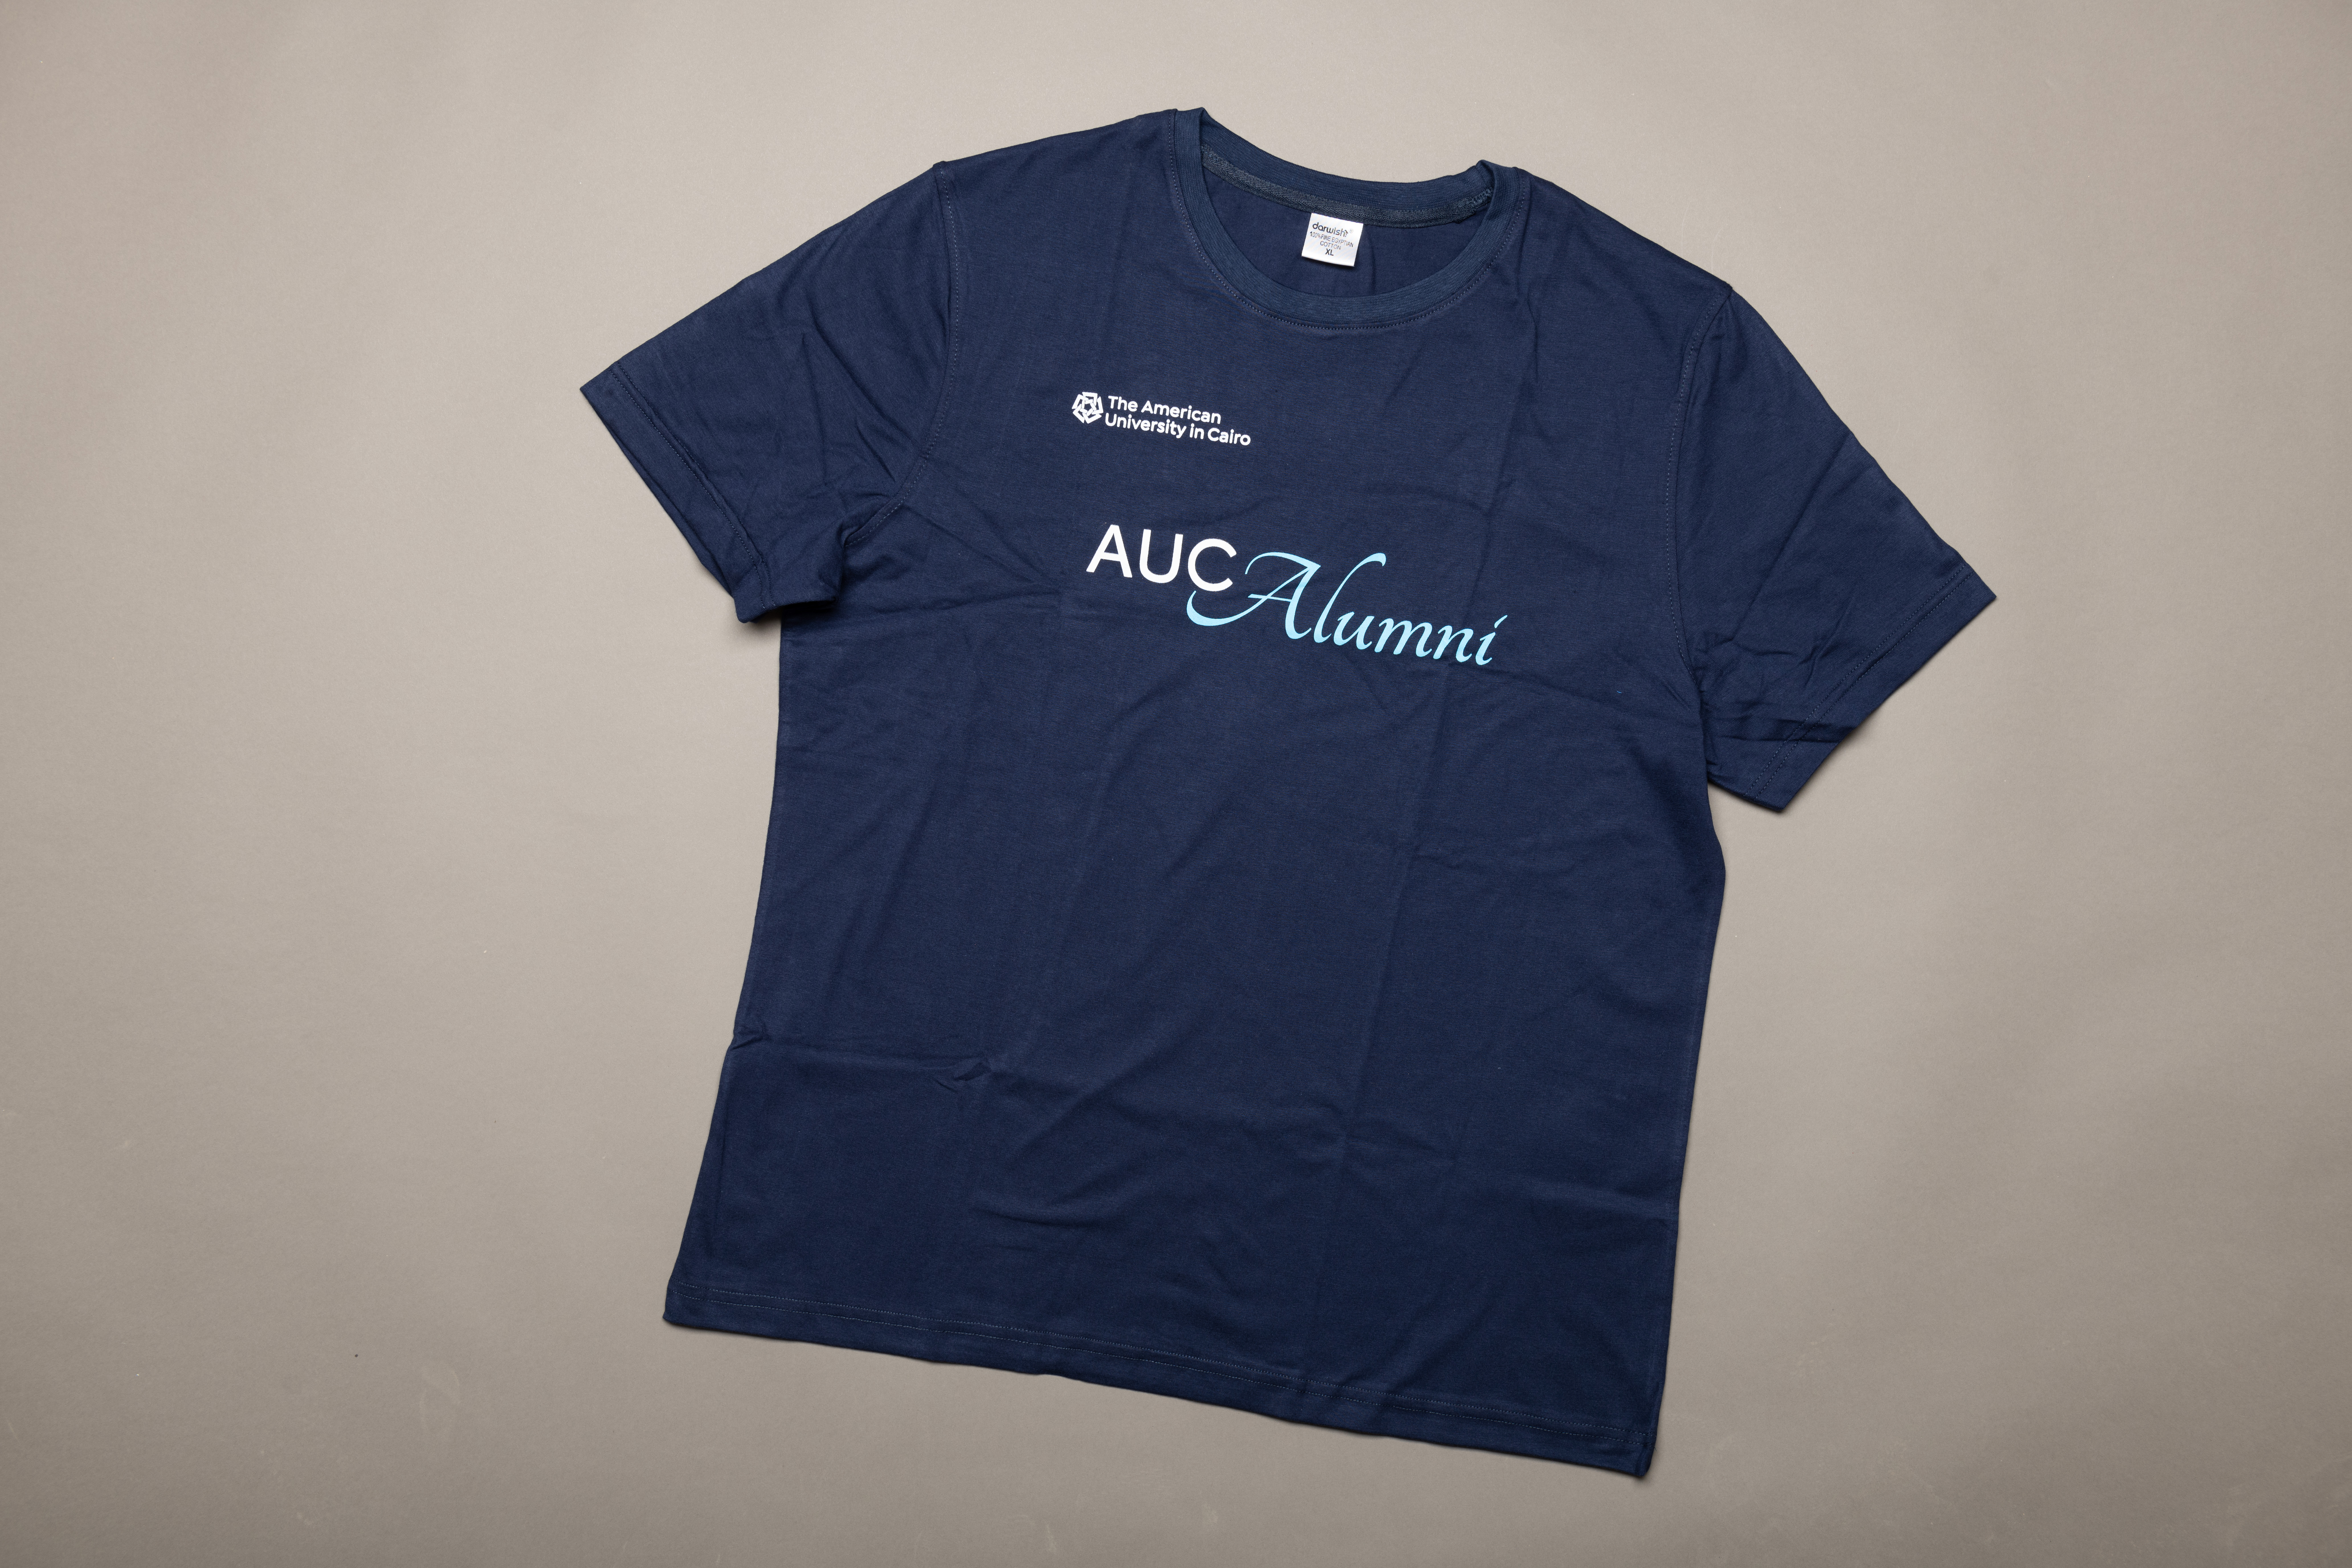 T-shirt (alumni)